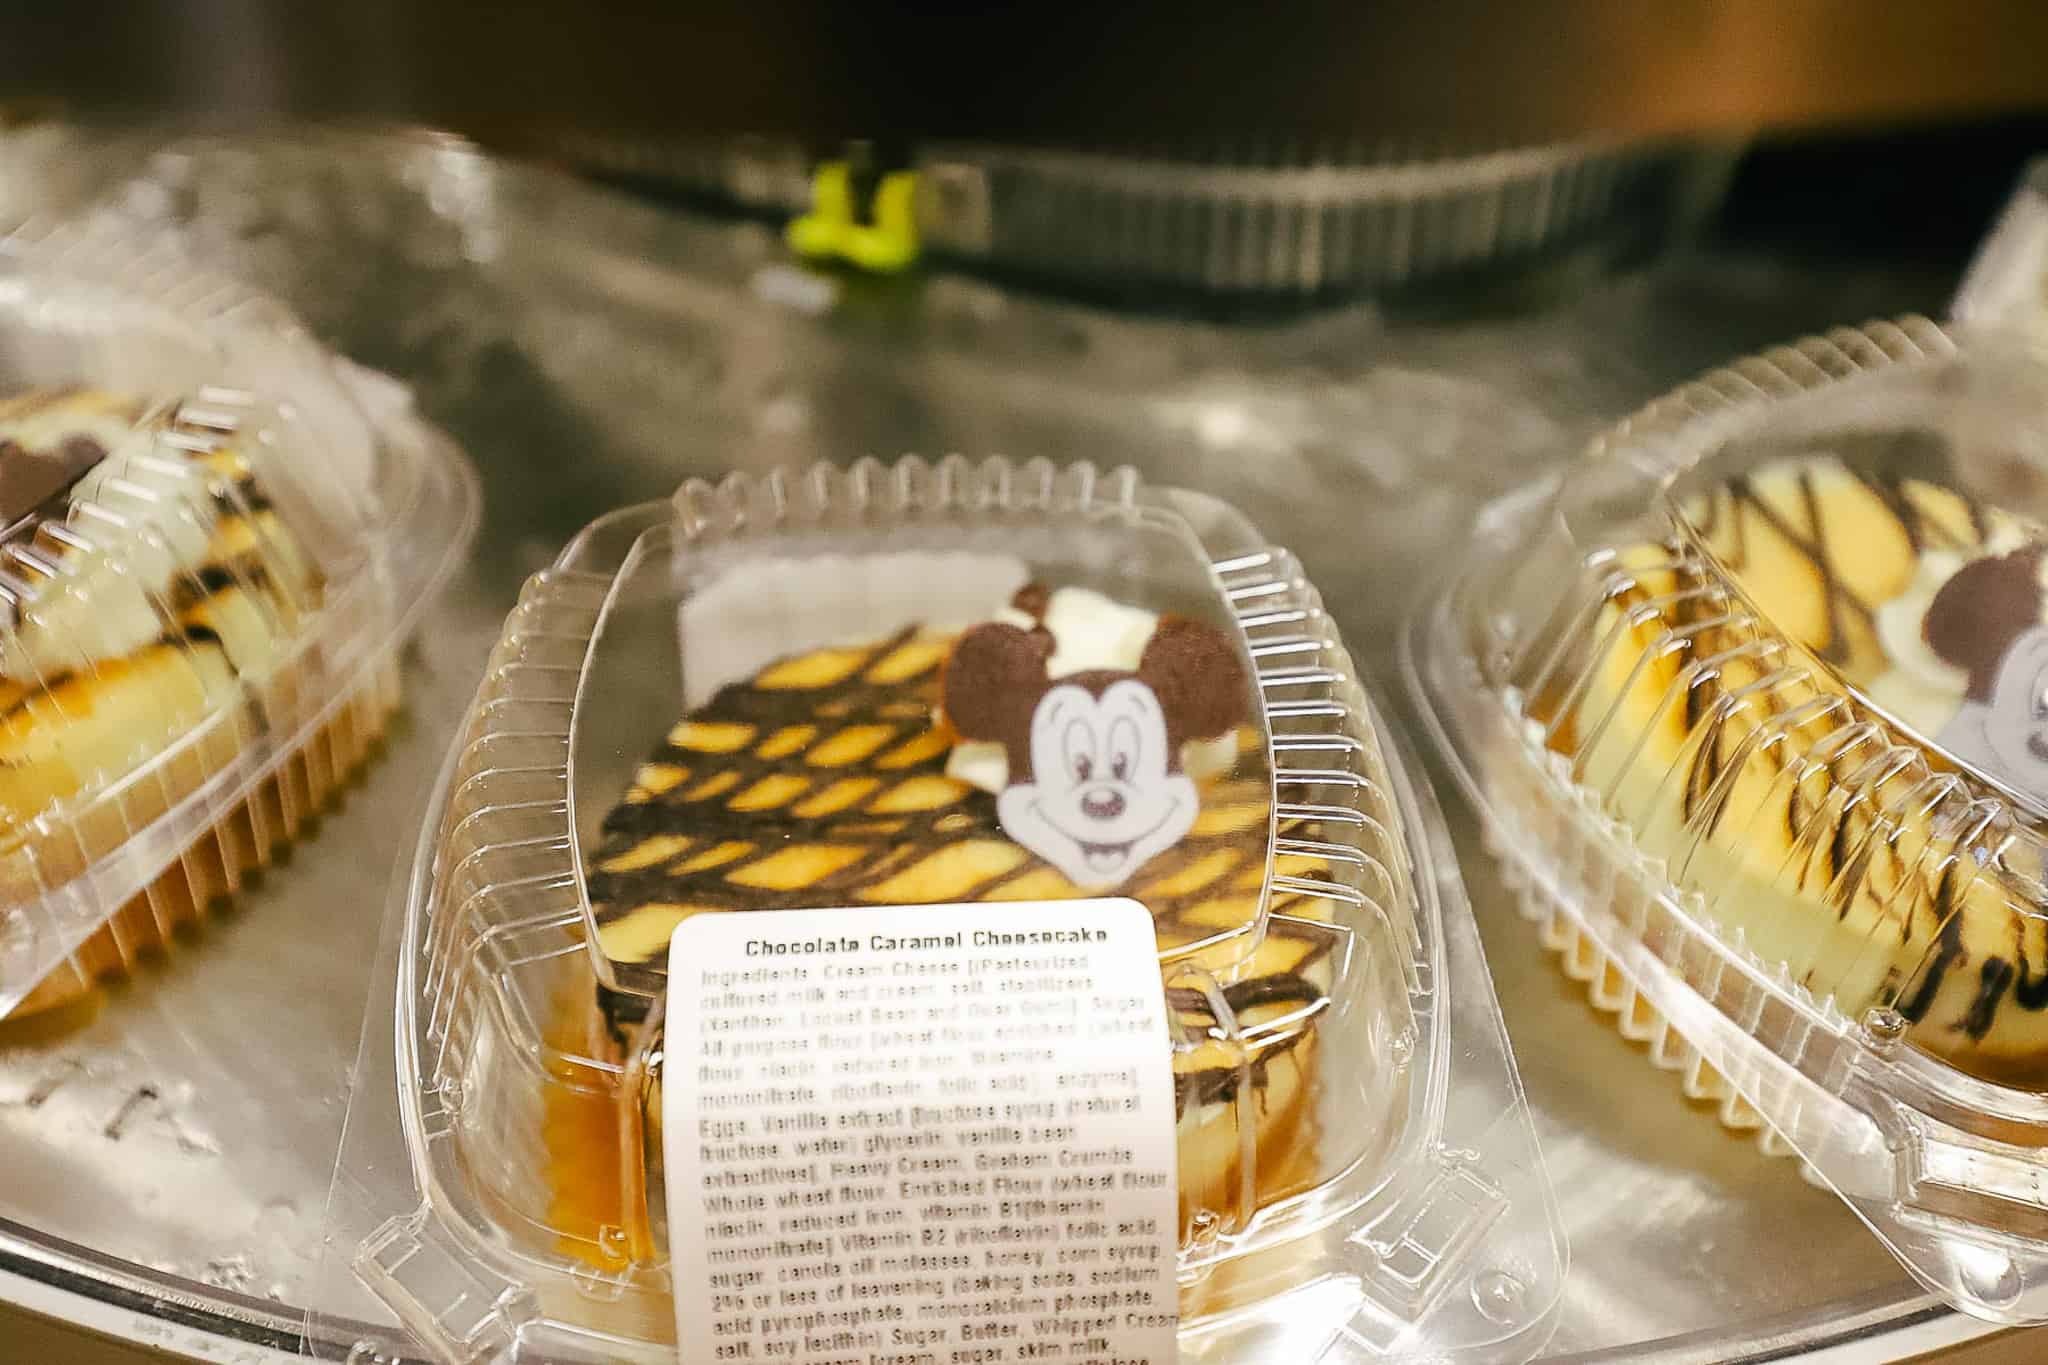 Chocolate Caramel Cheesecake at Disney's Beach Club Restaurants